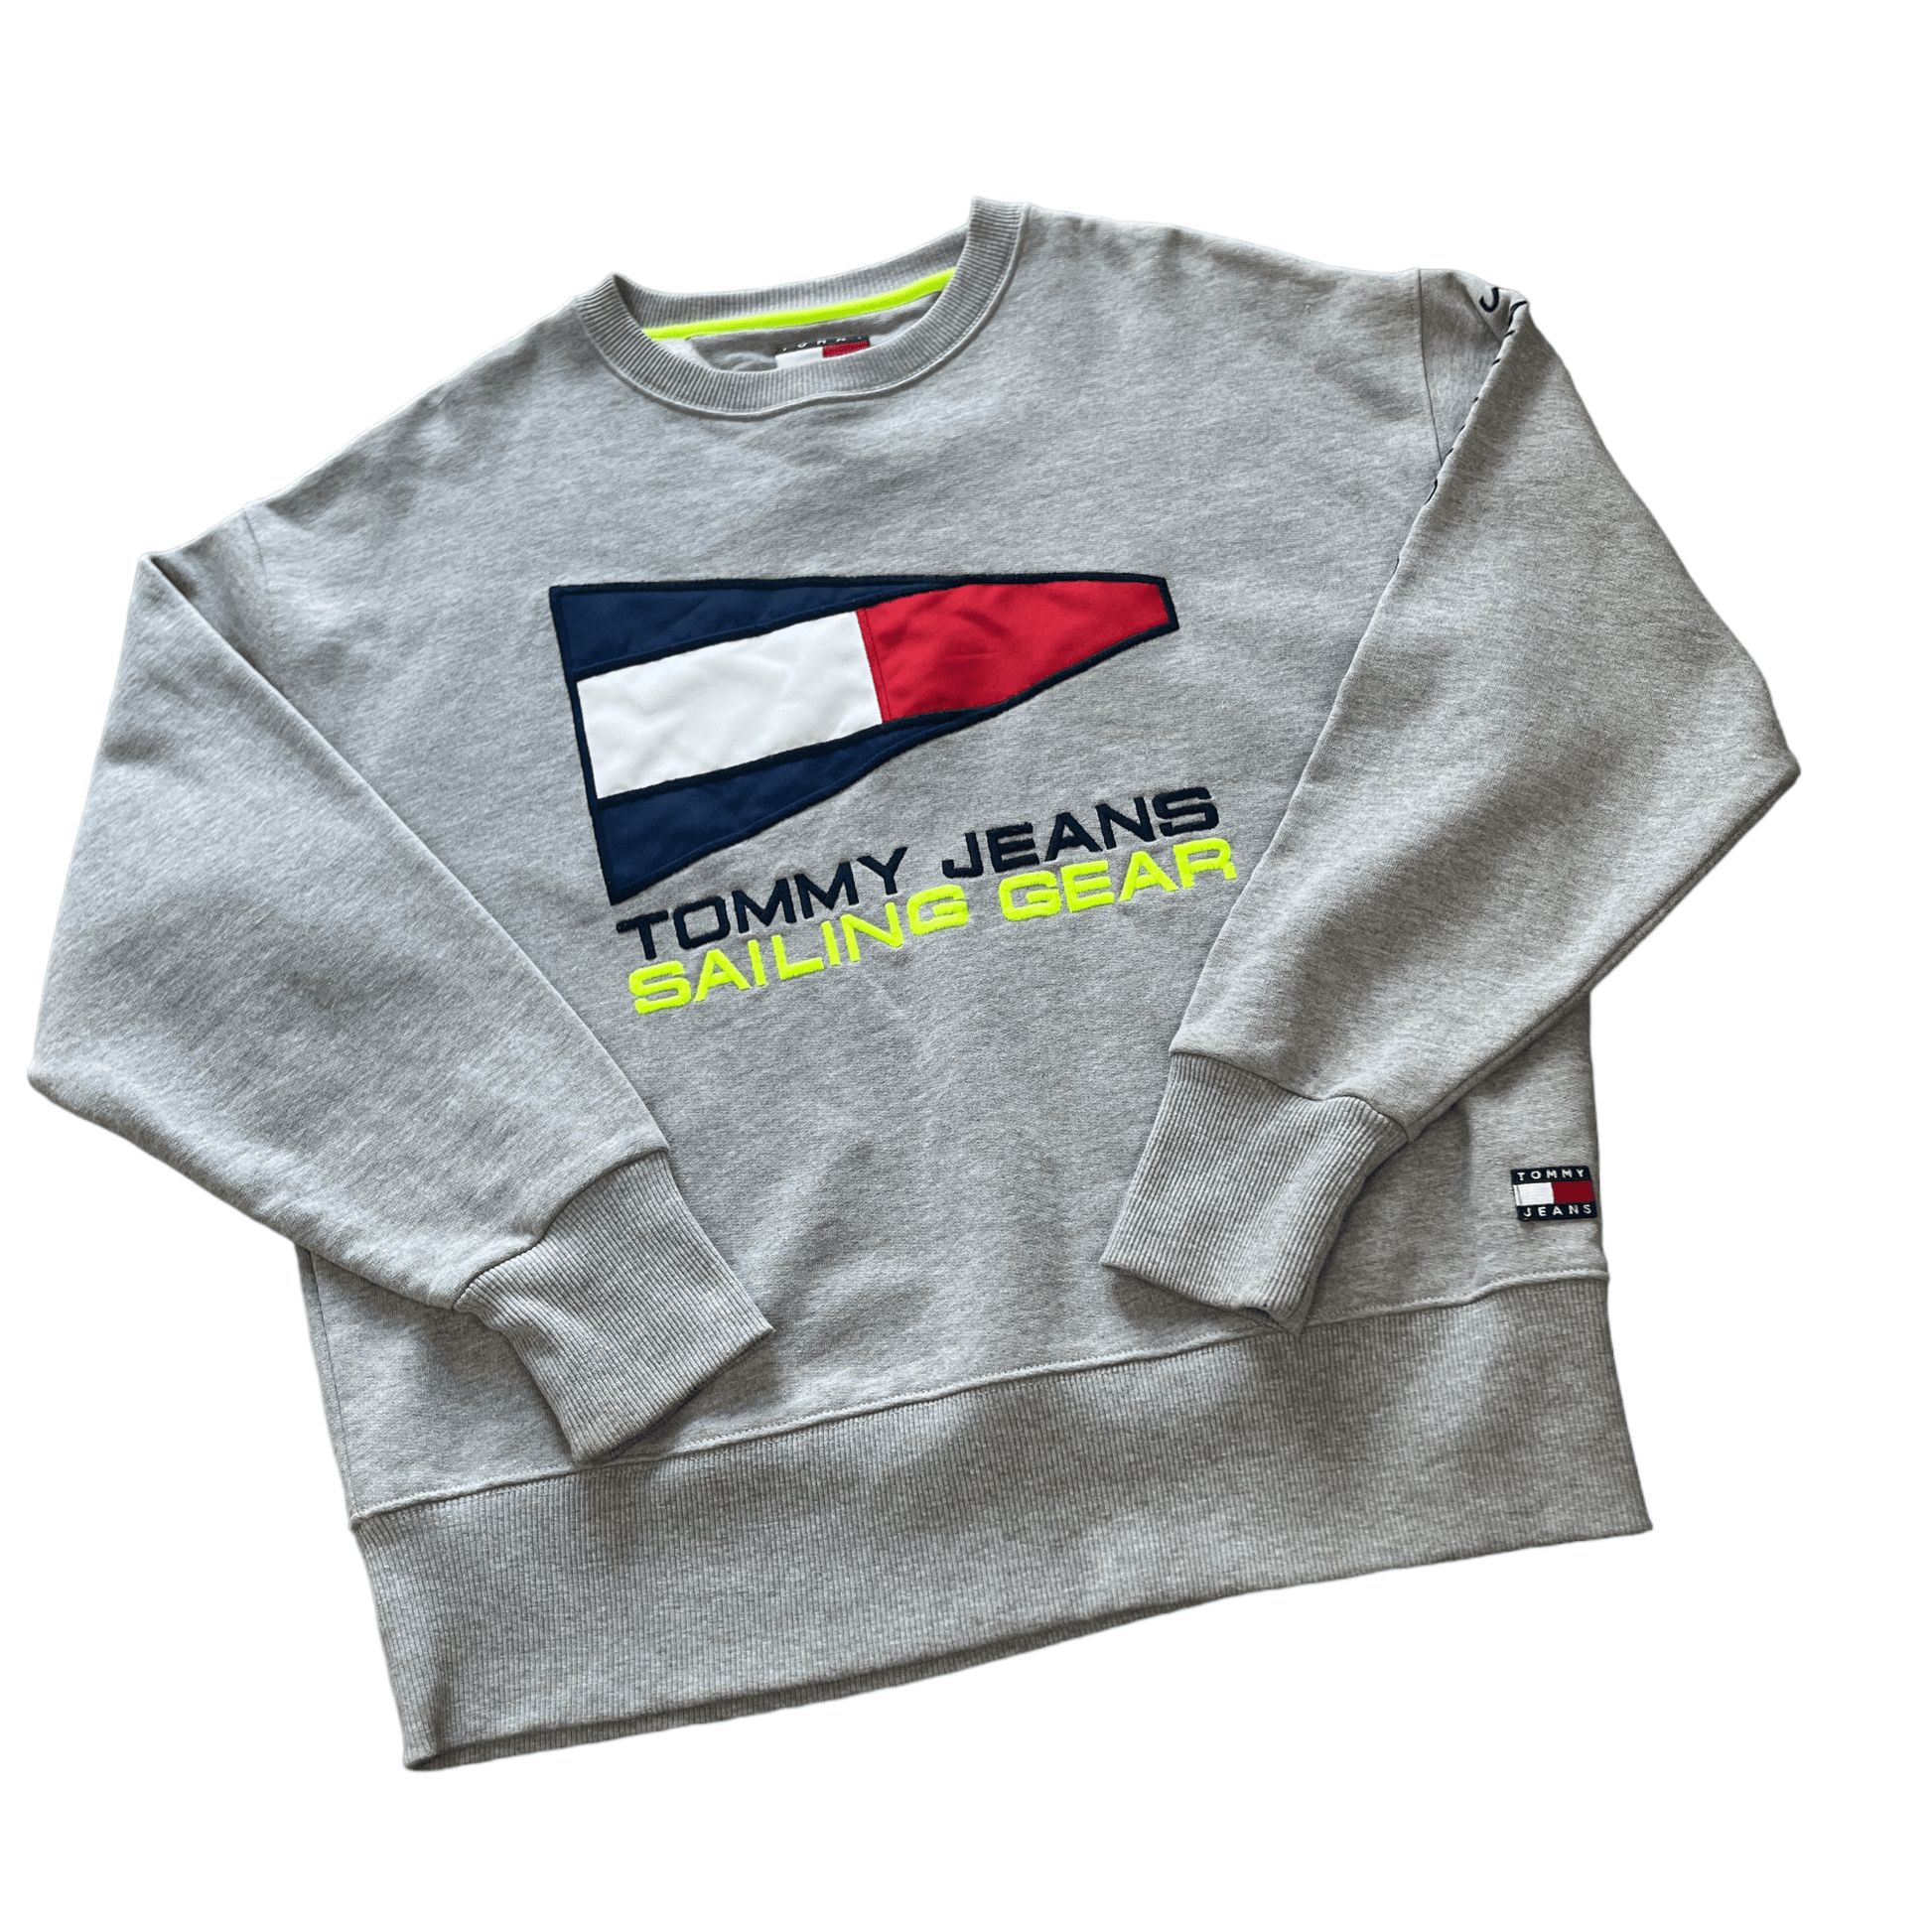 Vintage Grey Tommy Hilfiger Sailing Gear Sweatshirt - Large - The Streetwear Studio